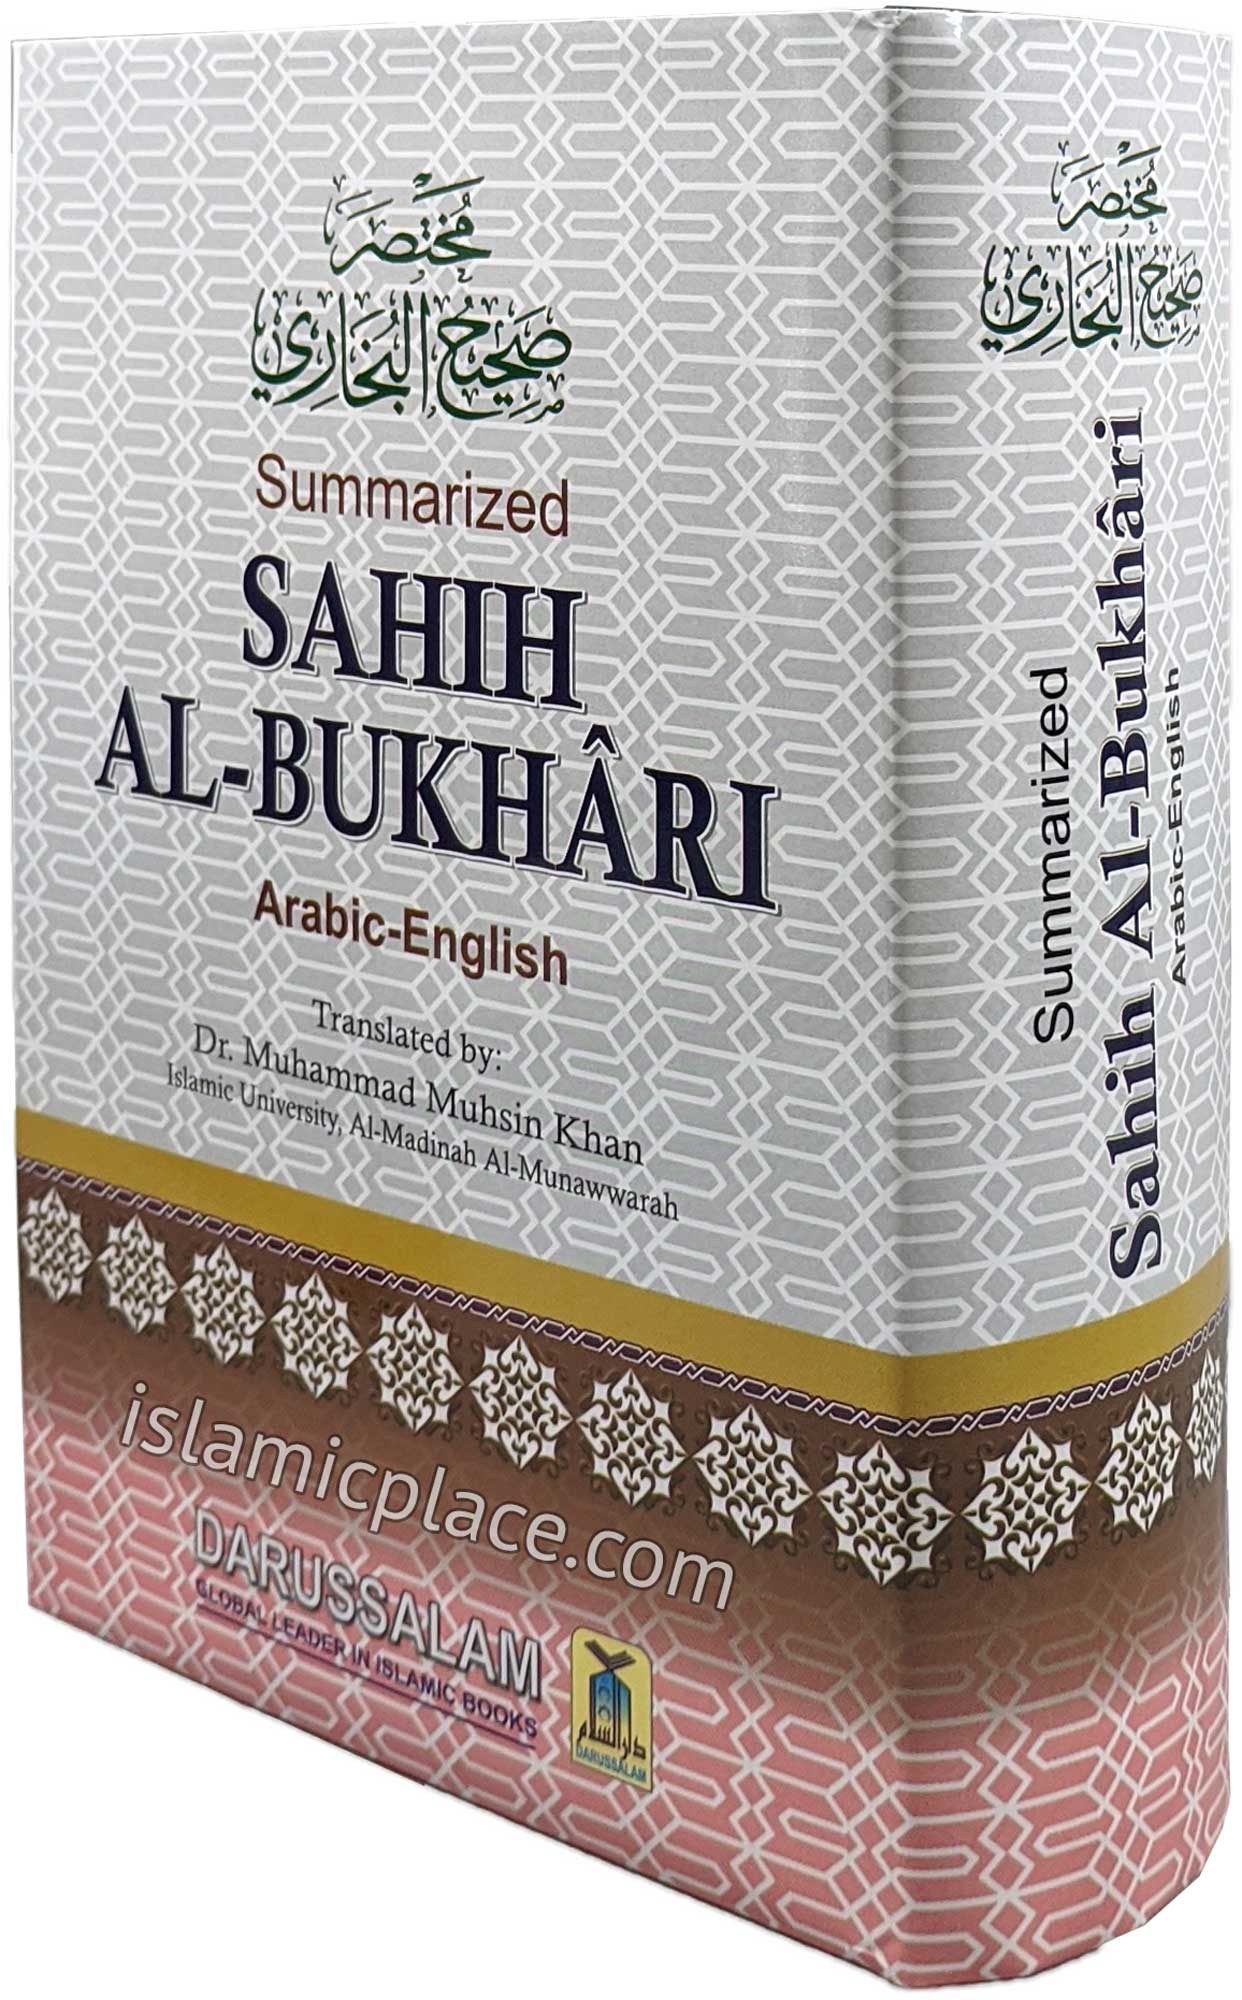 Summarized Sahih Al-Bukhari (Medium Hardback) approx 5" x 7"